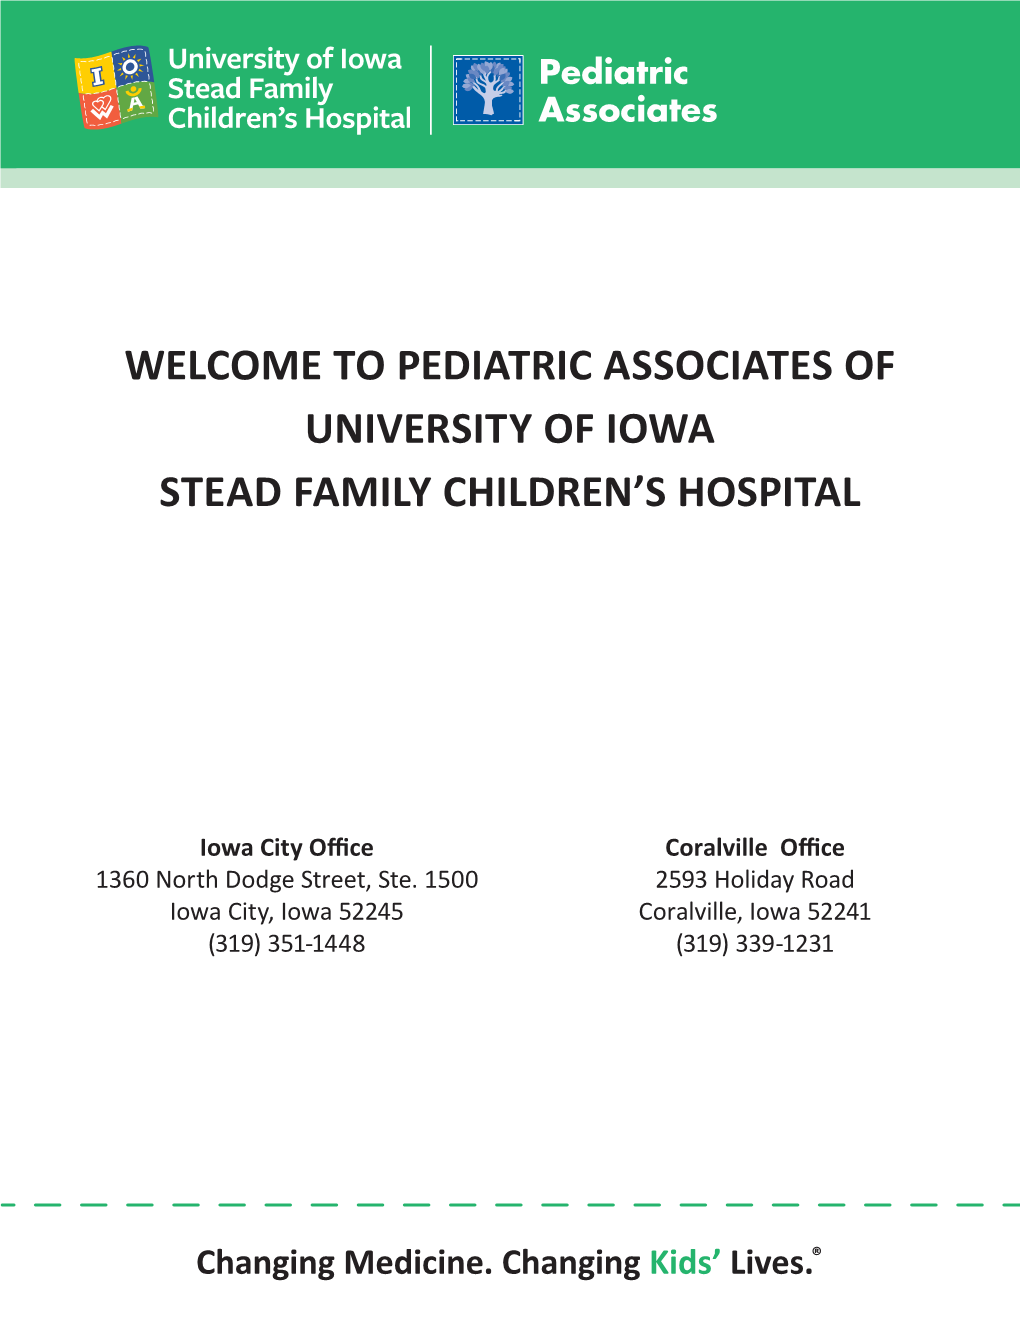 Pediatric Associates of University of Iowa Stead Family Children's Hospital